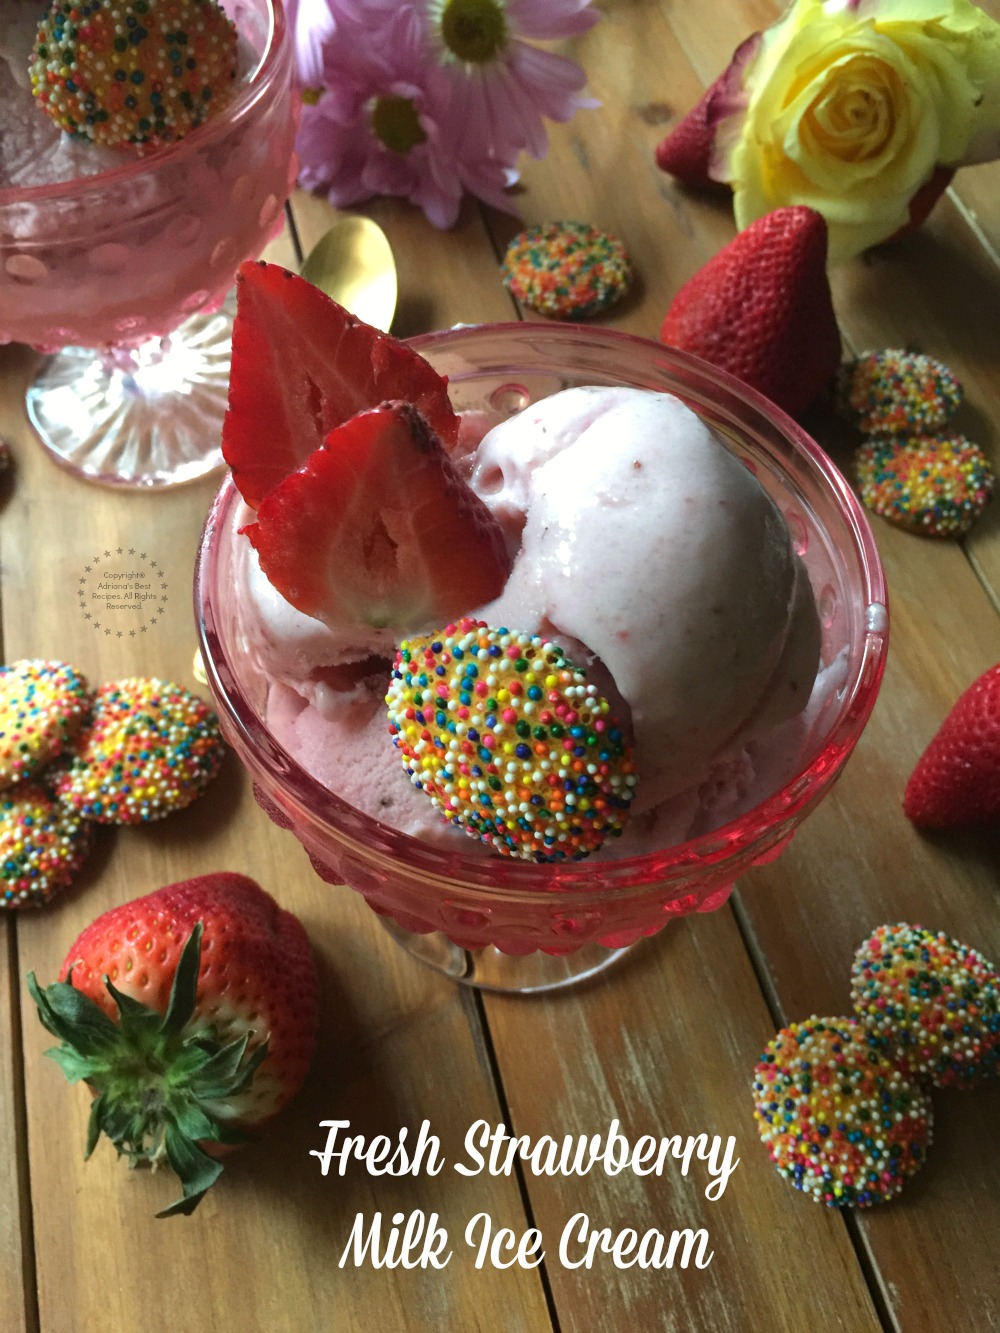 A Homemade Fresh Strawberry Milk Ice Cream A Three Ingredients Recipe and No Churn